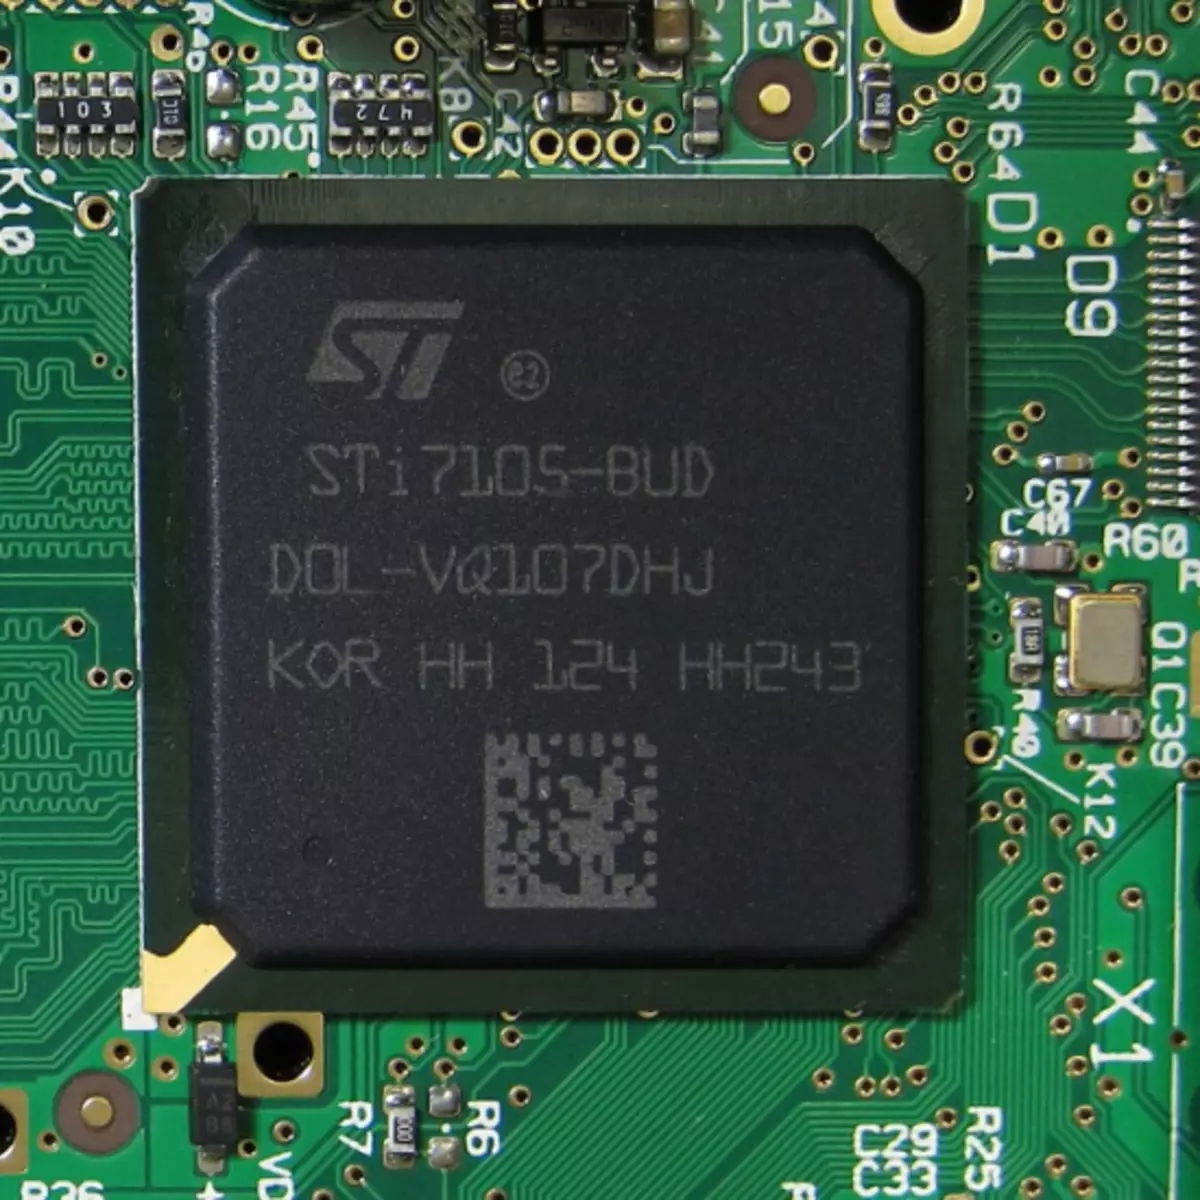 MAG 250 STI7105-BUD procesors